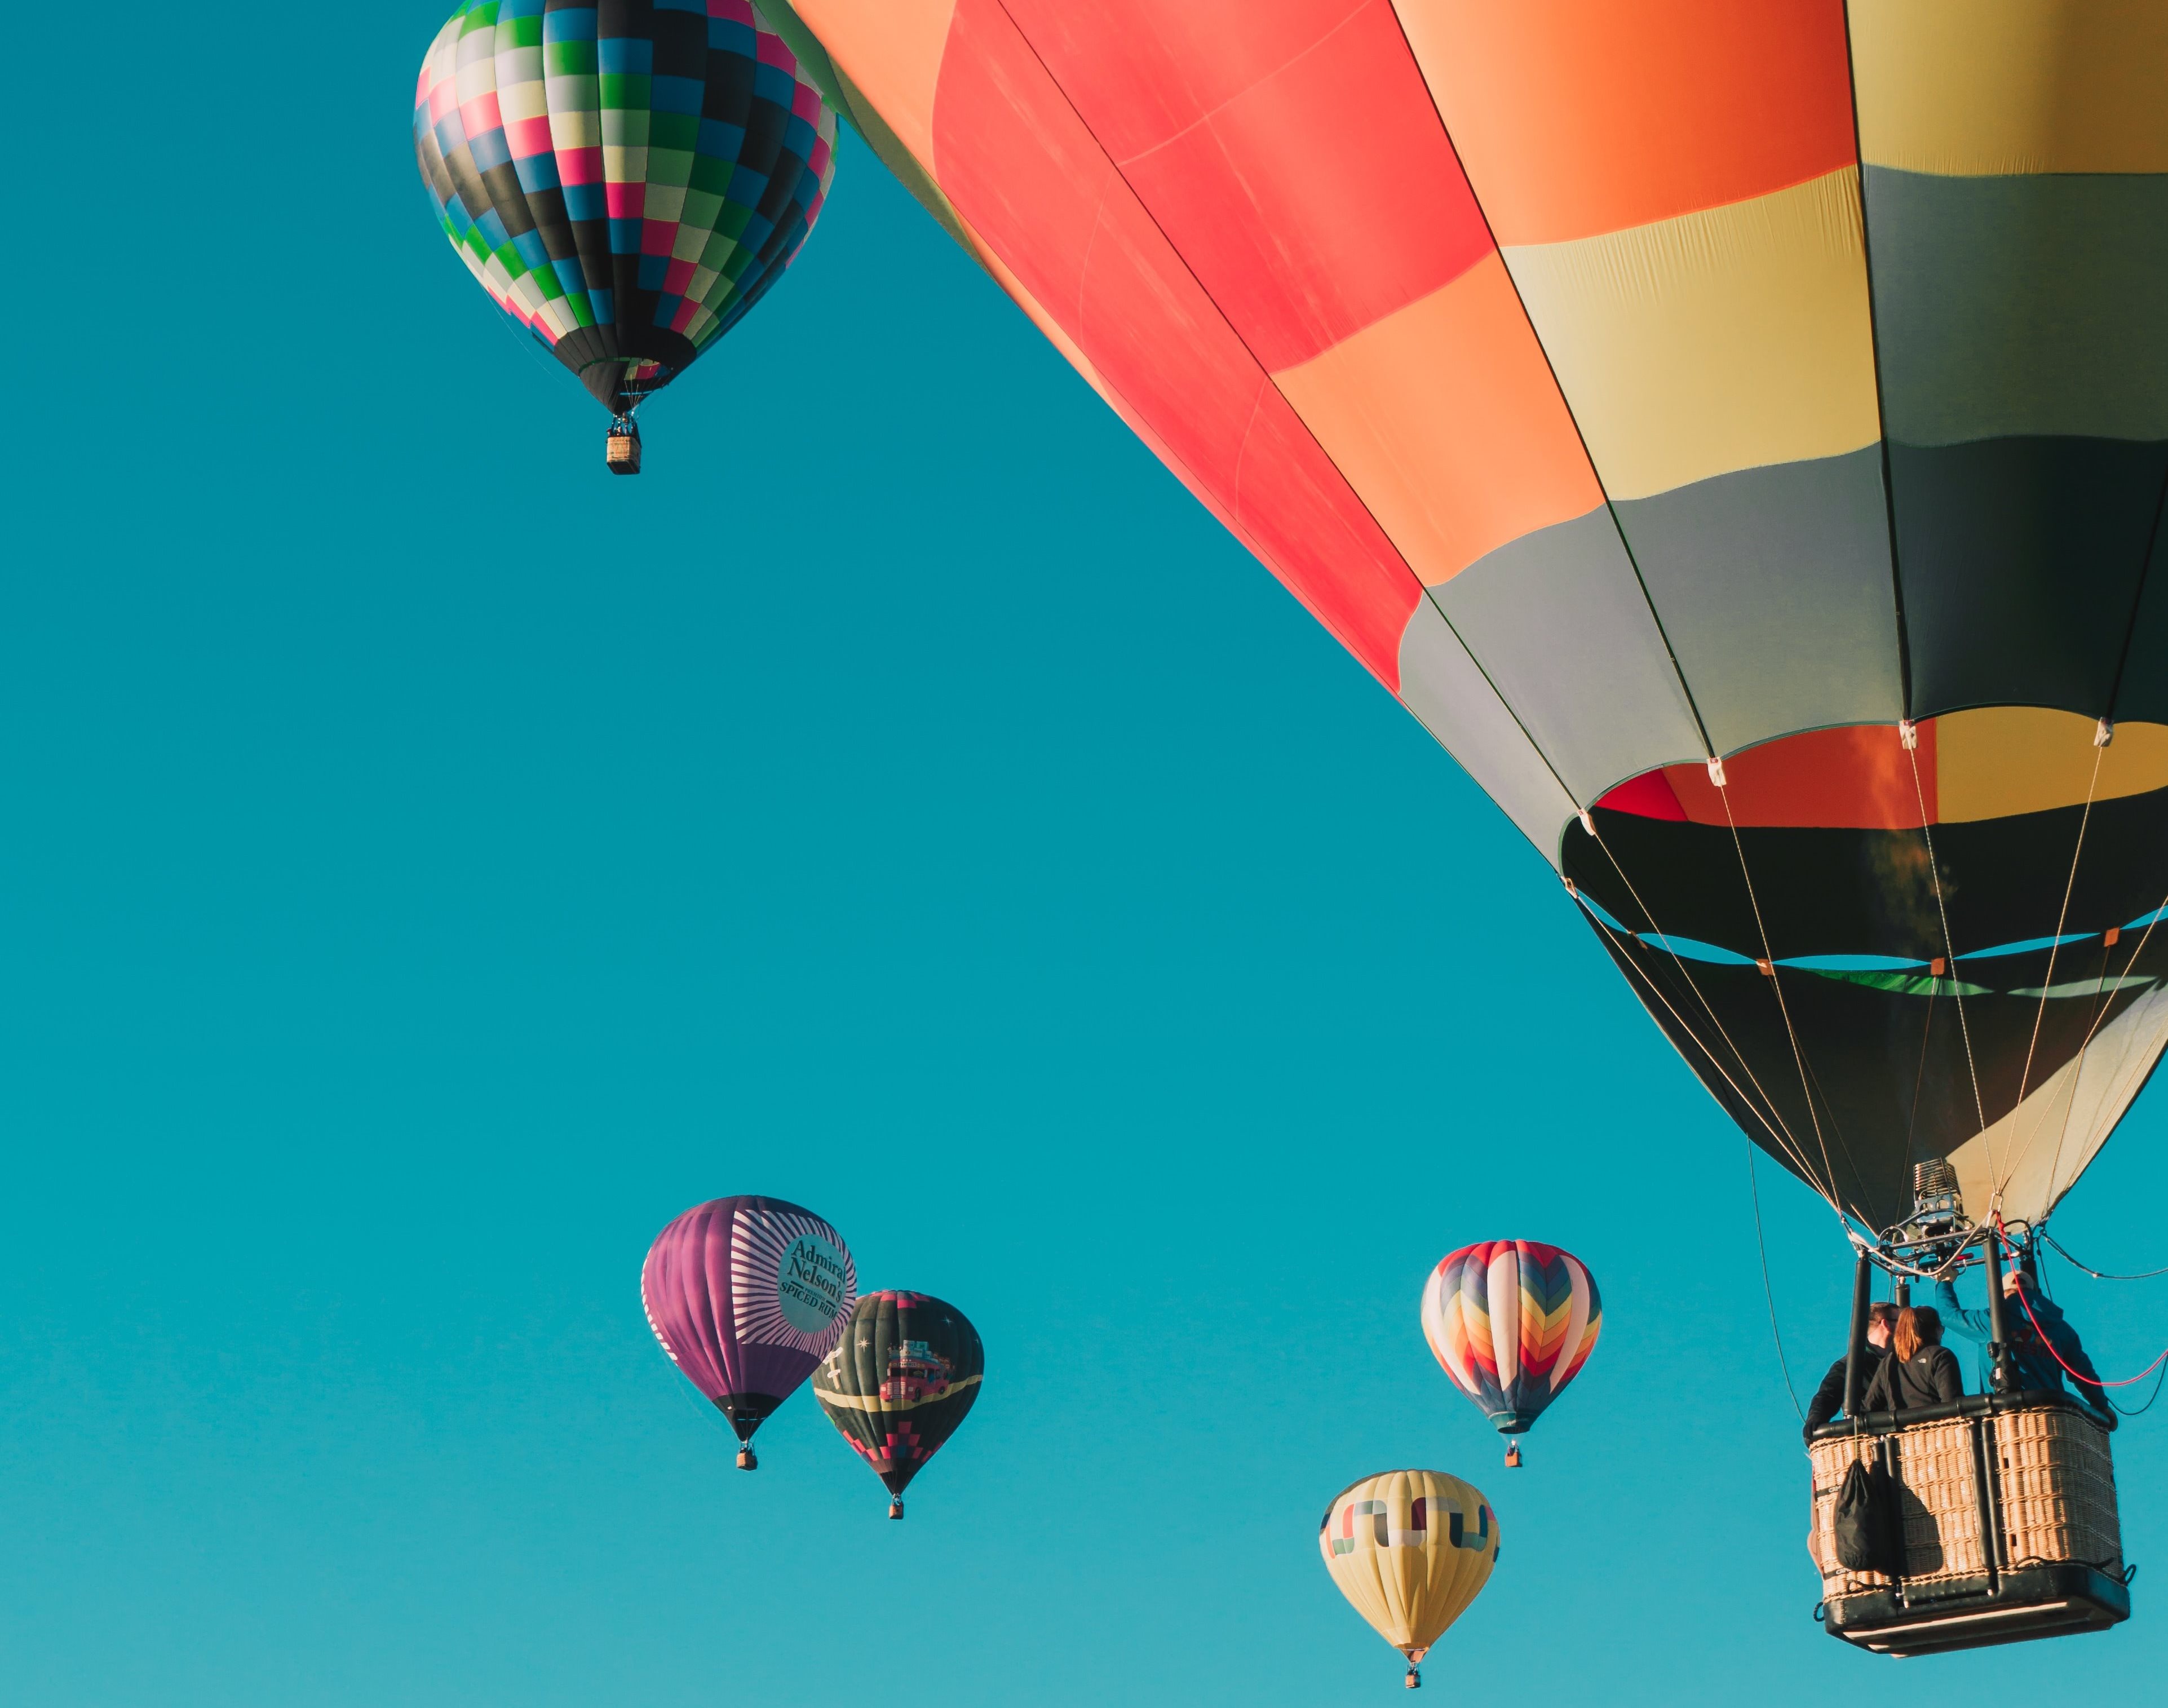 Hot air Balloon Adventure Ride In Dubai (Platinum)